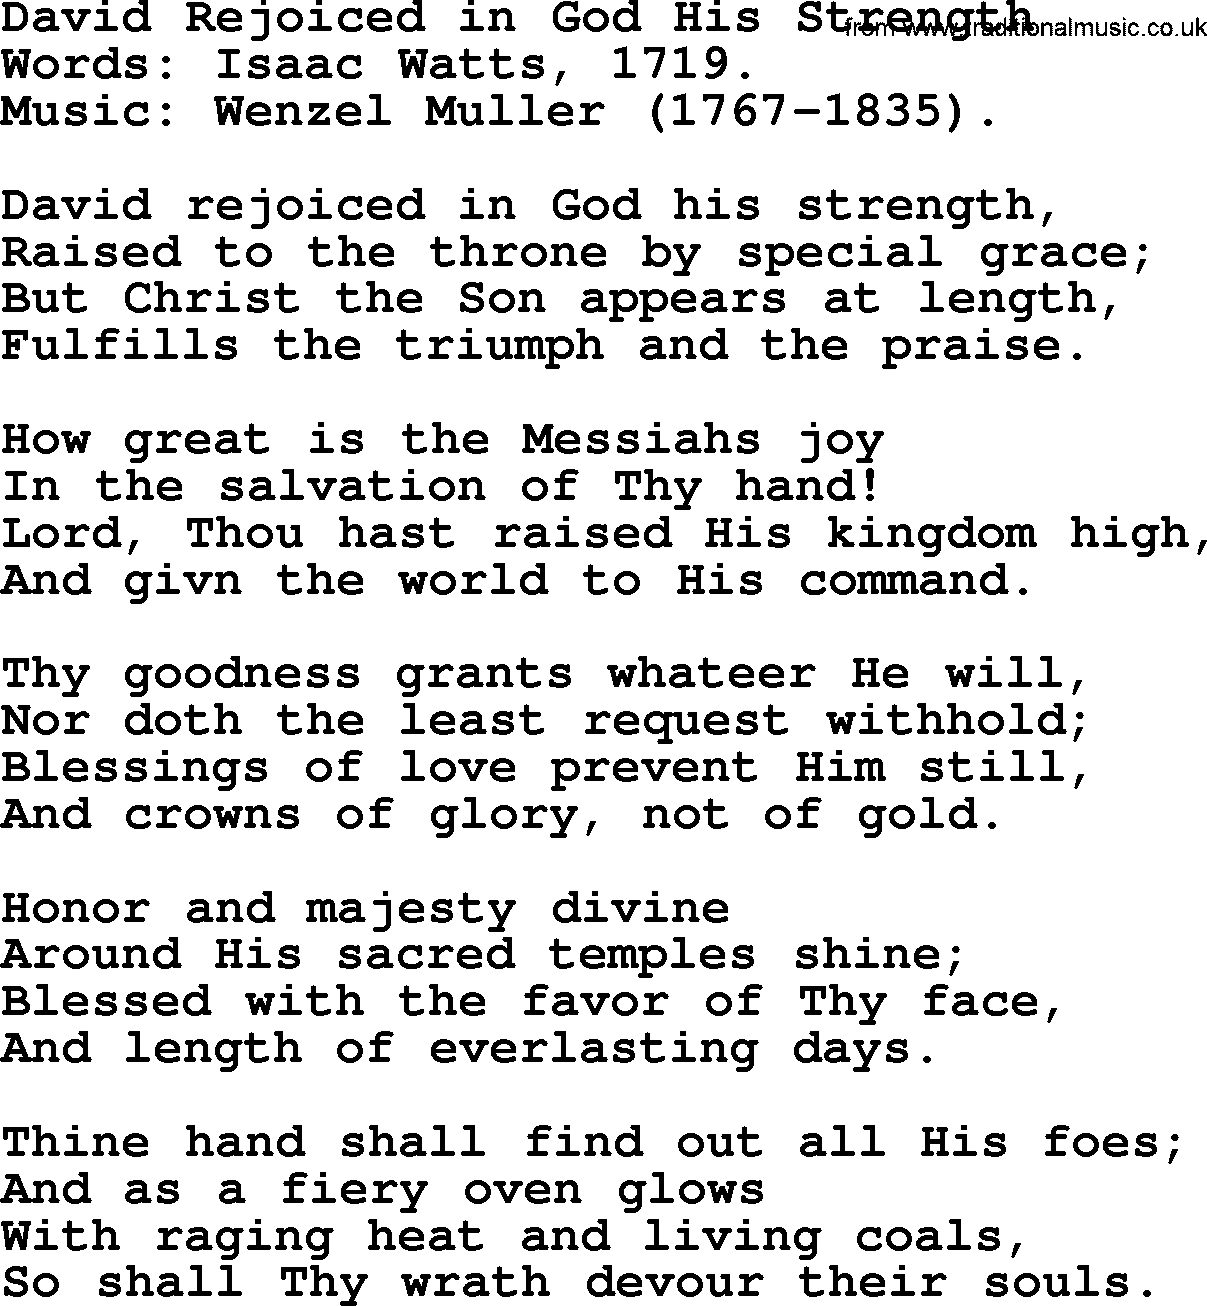 Isaac Watts Christian hymn: David Rejoiced in God His Strength- lyricss